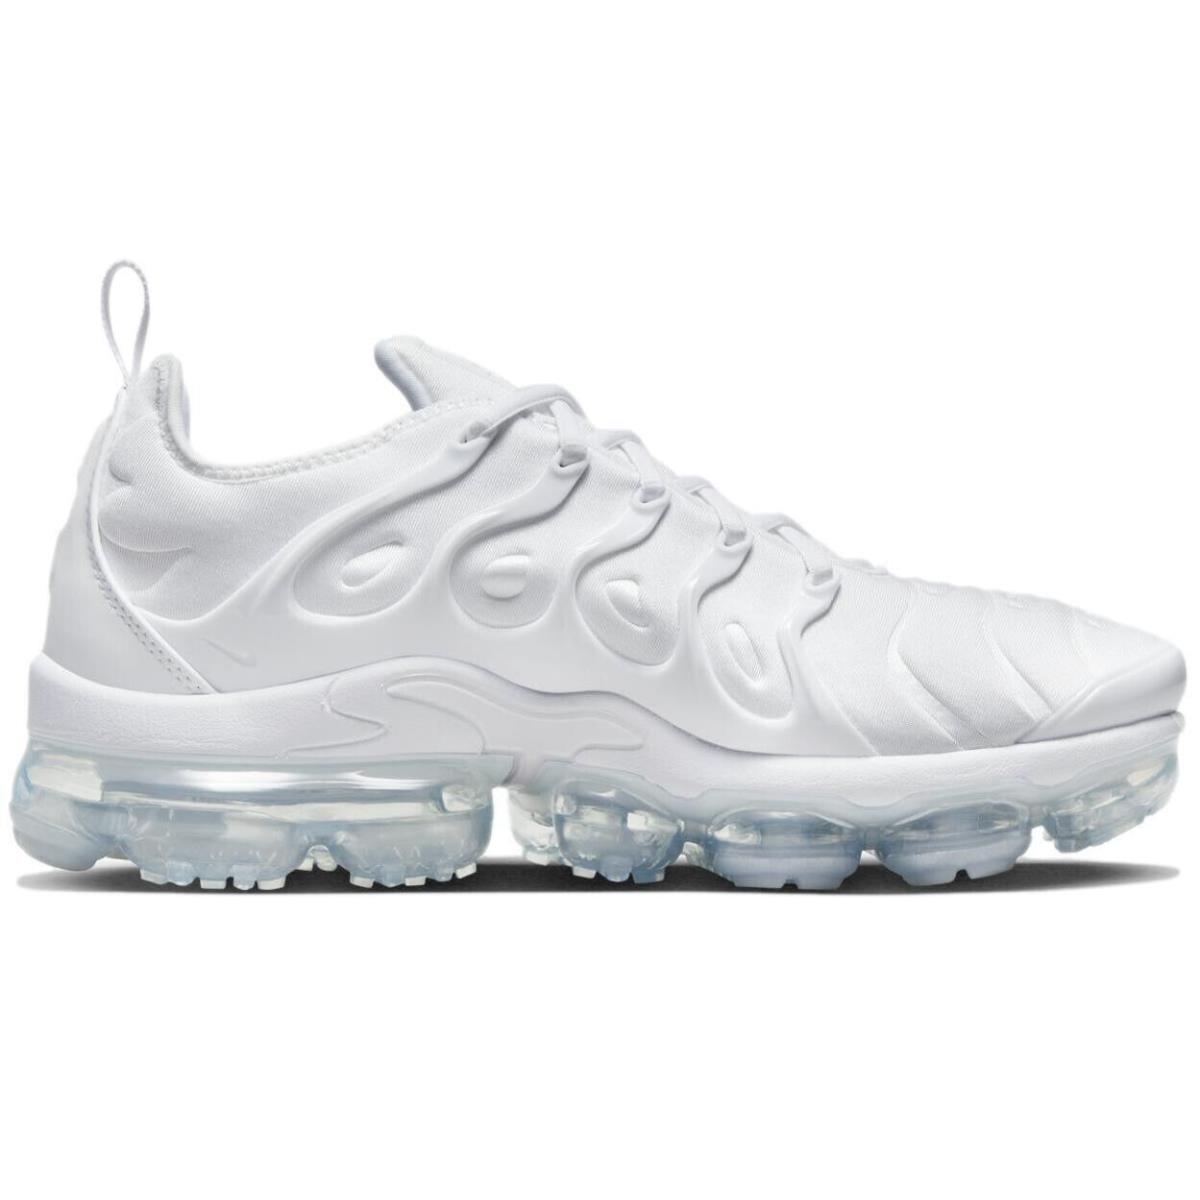 Nike Air Vapormax Plus `white Platinum` Men`s Shoes Sneakers - Size 9.5